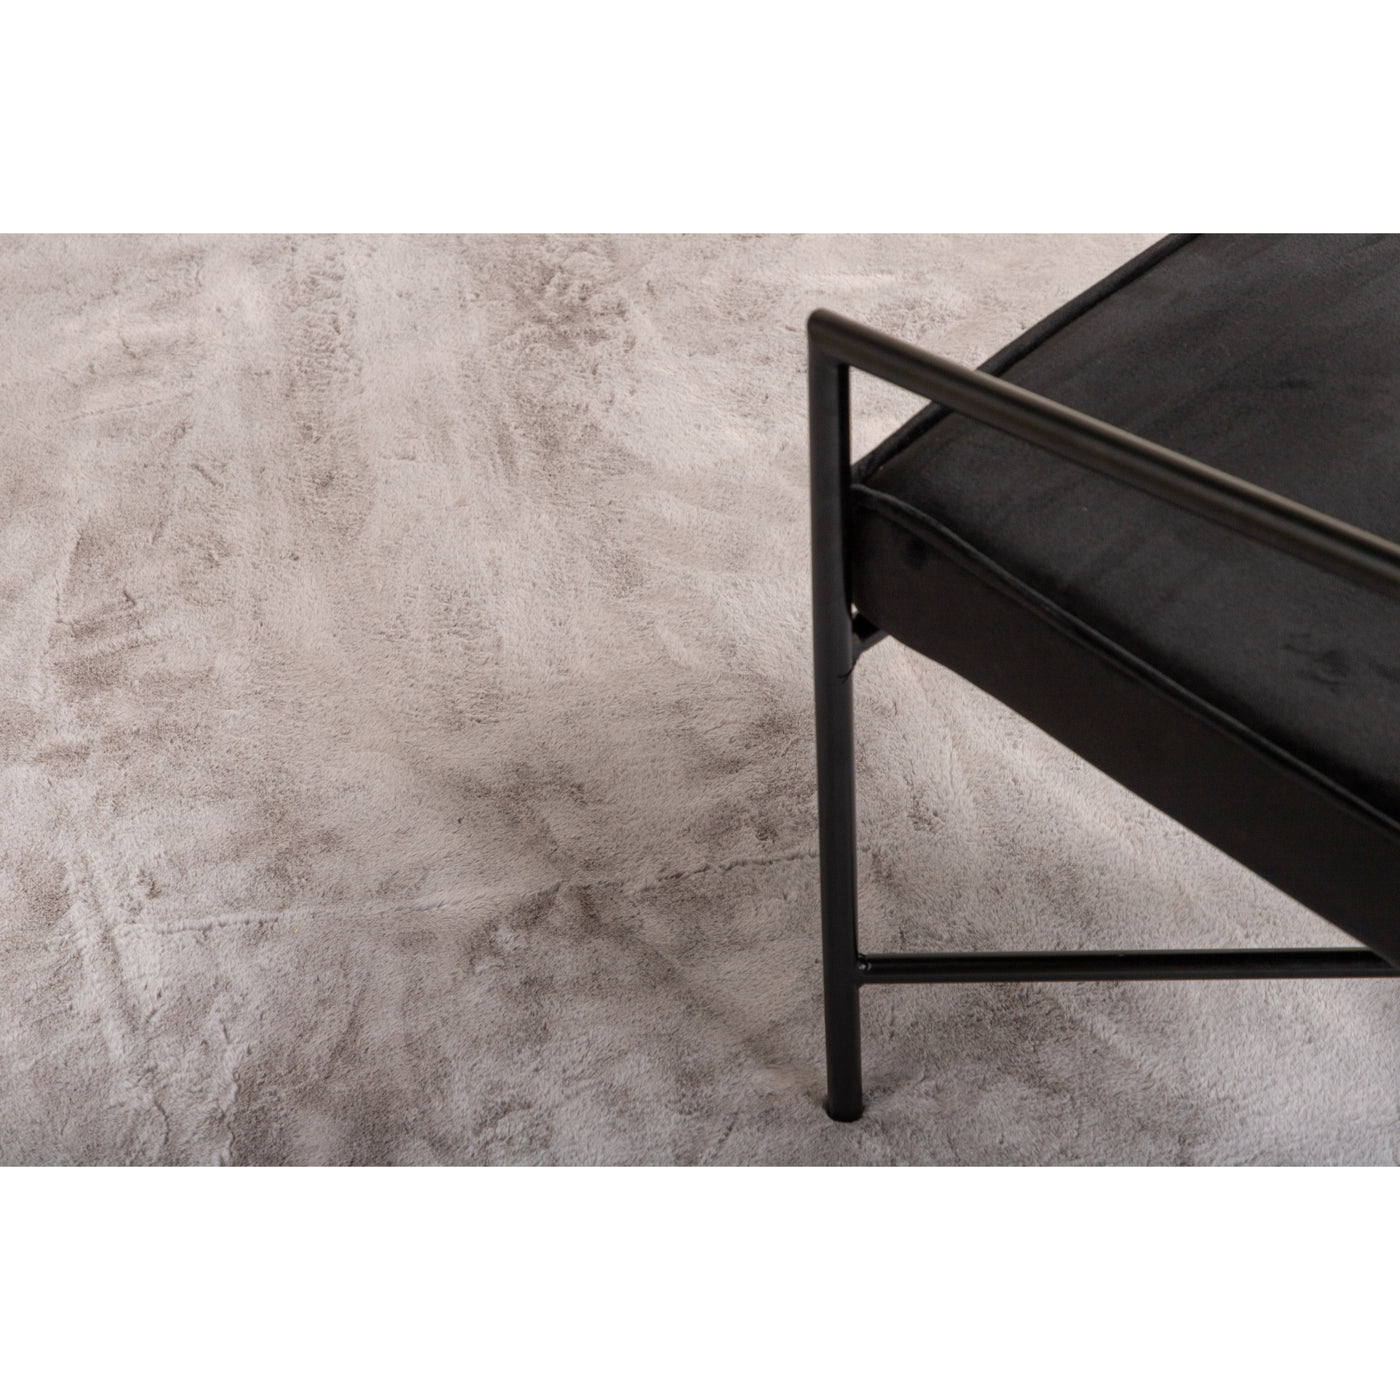 Nurit Polyester-Teppich – 200 x 300 – Grau